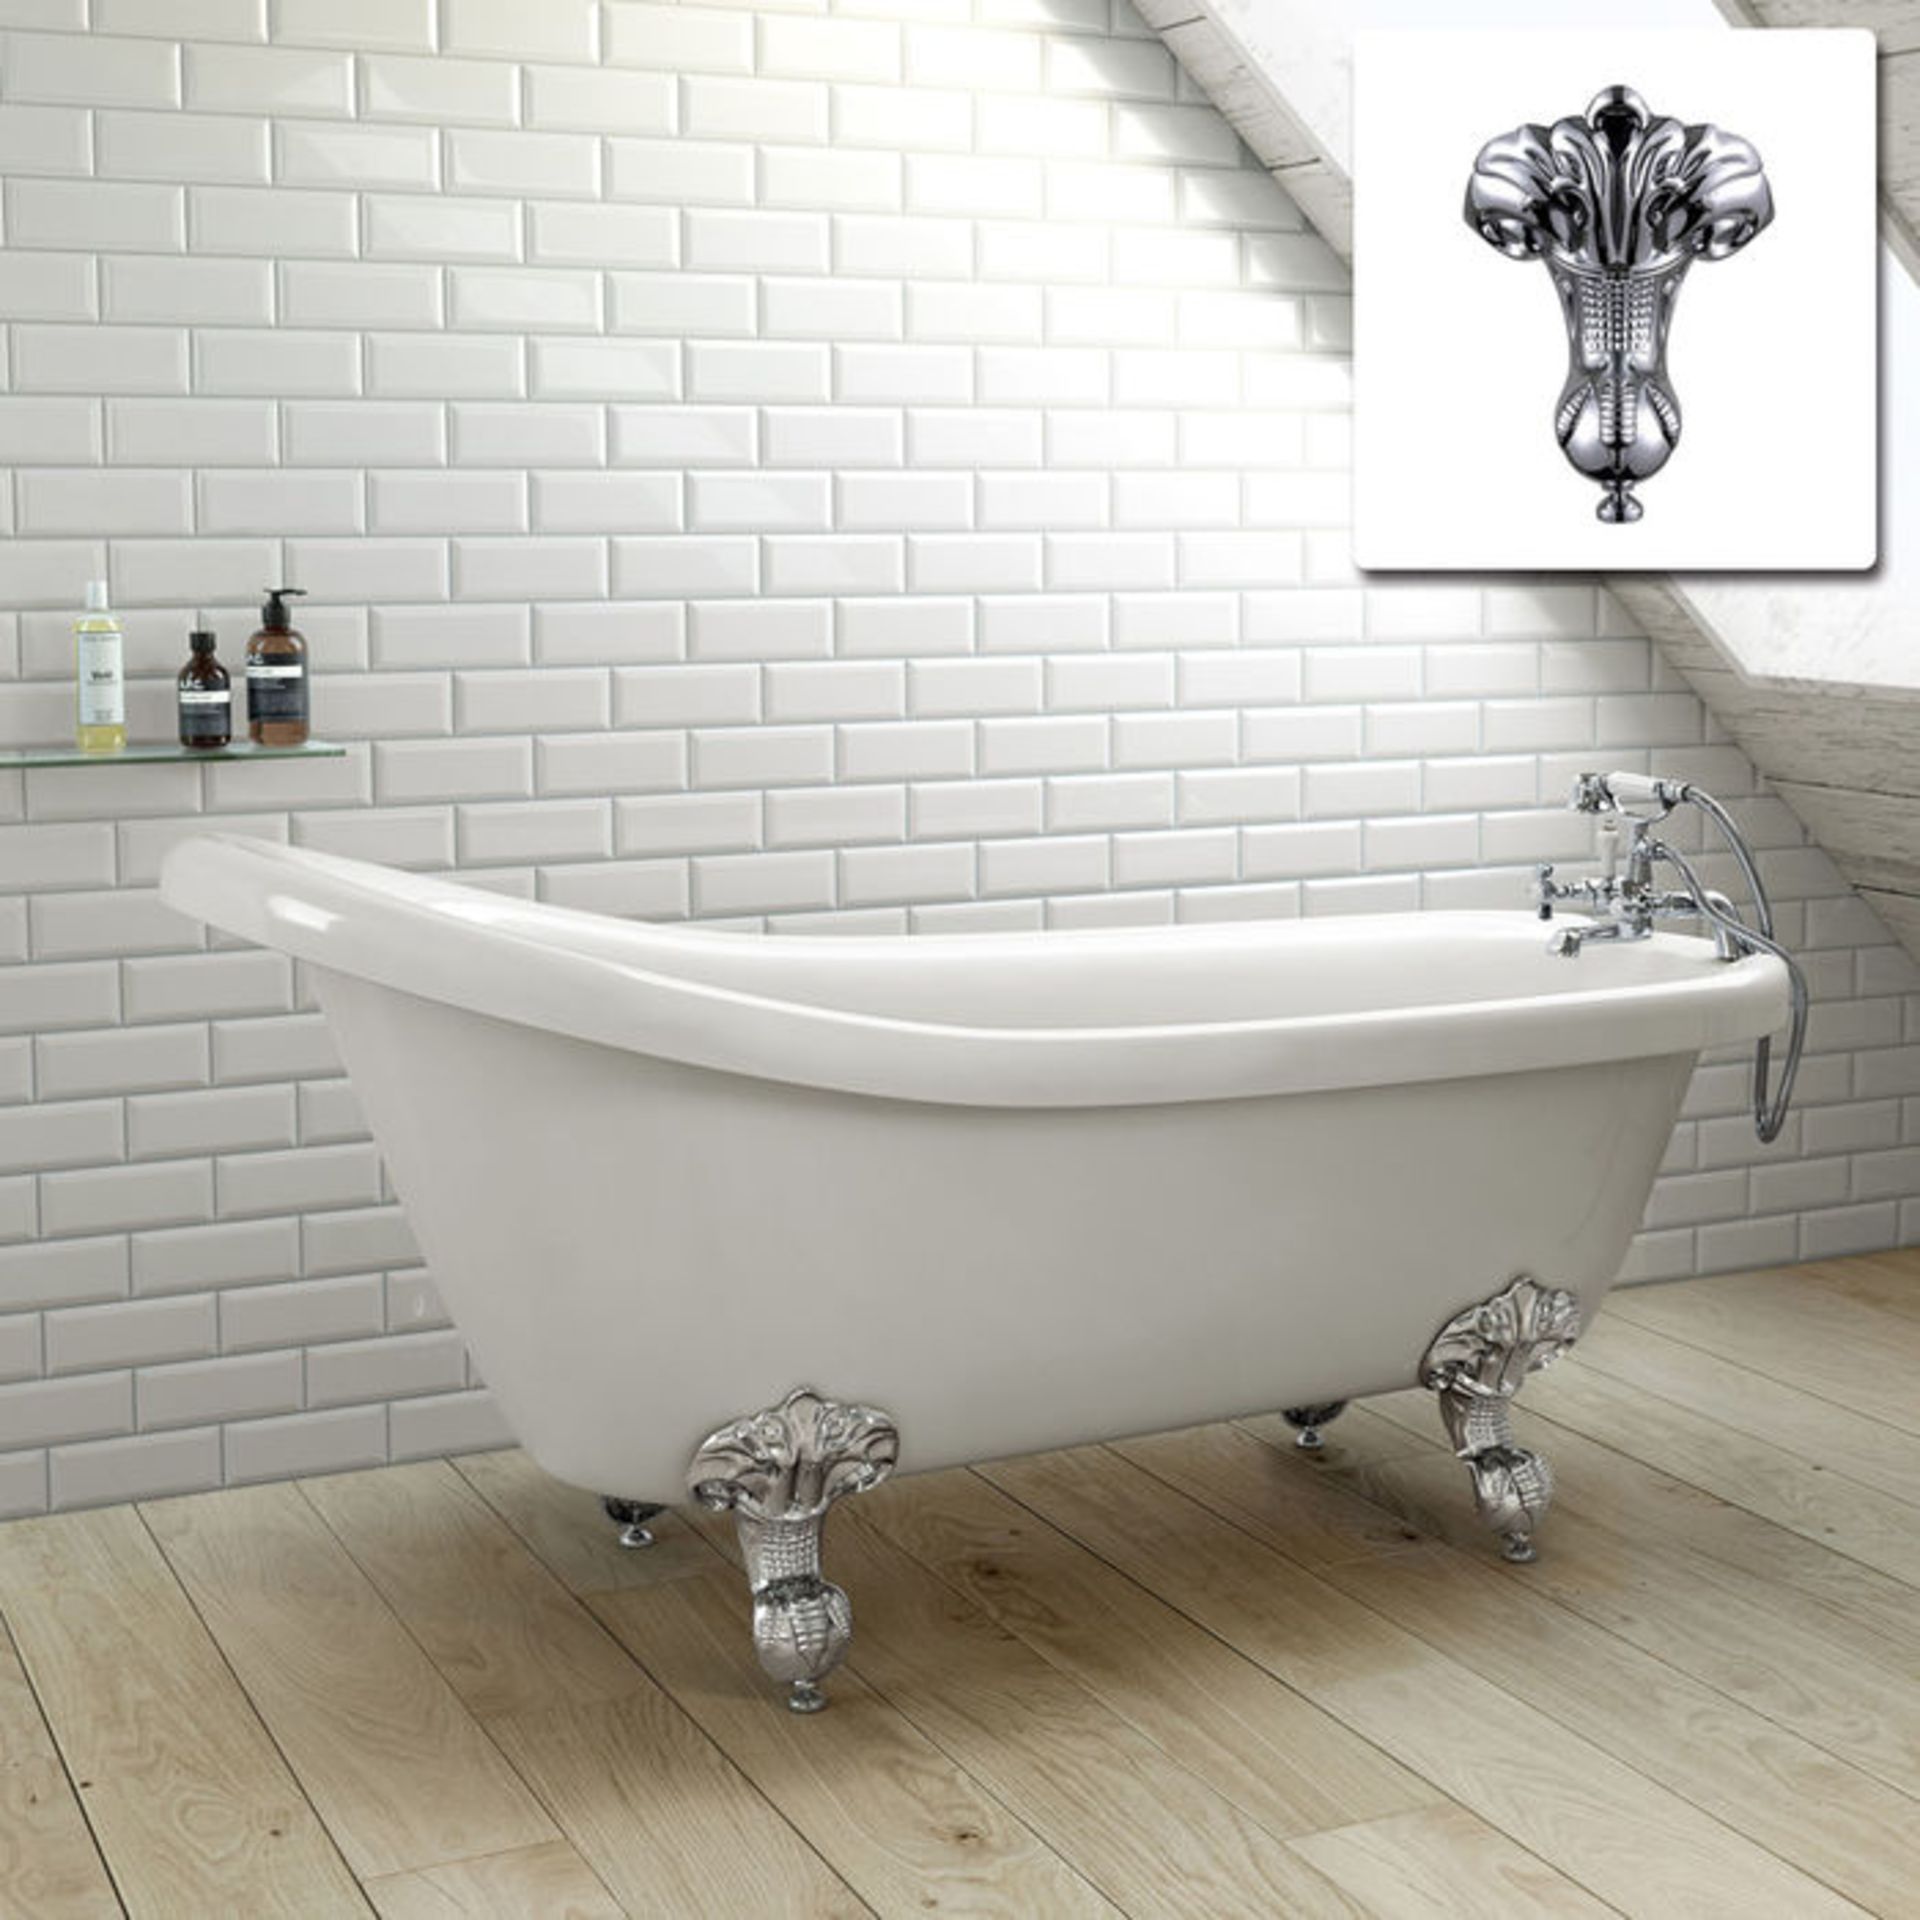 Brand New (QW5) 1550mm Cambridge Traditional Roll Top Slipper Bath - Ball Feet. RRP £899.99. Bath ma